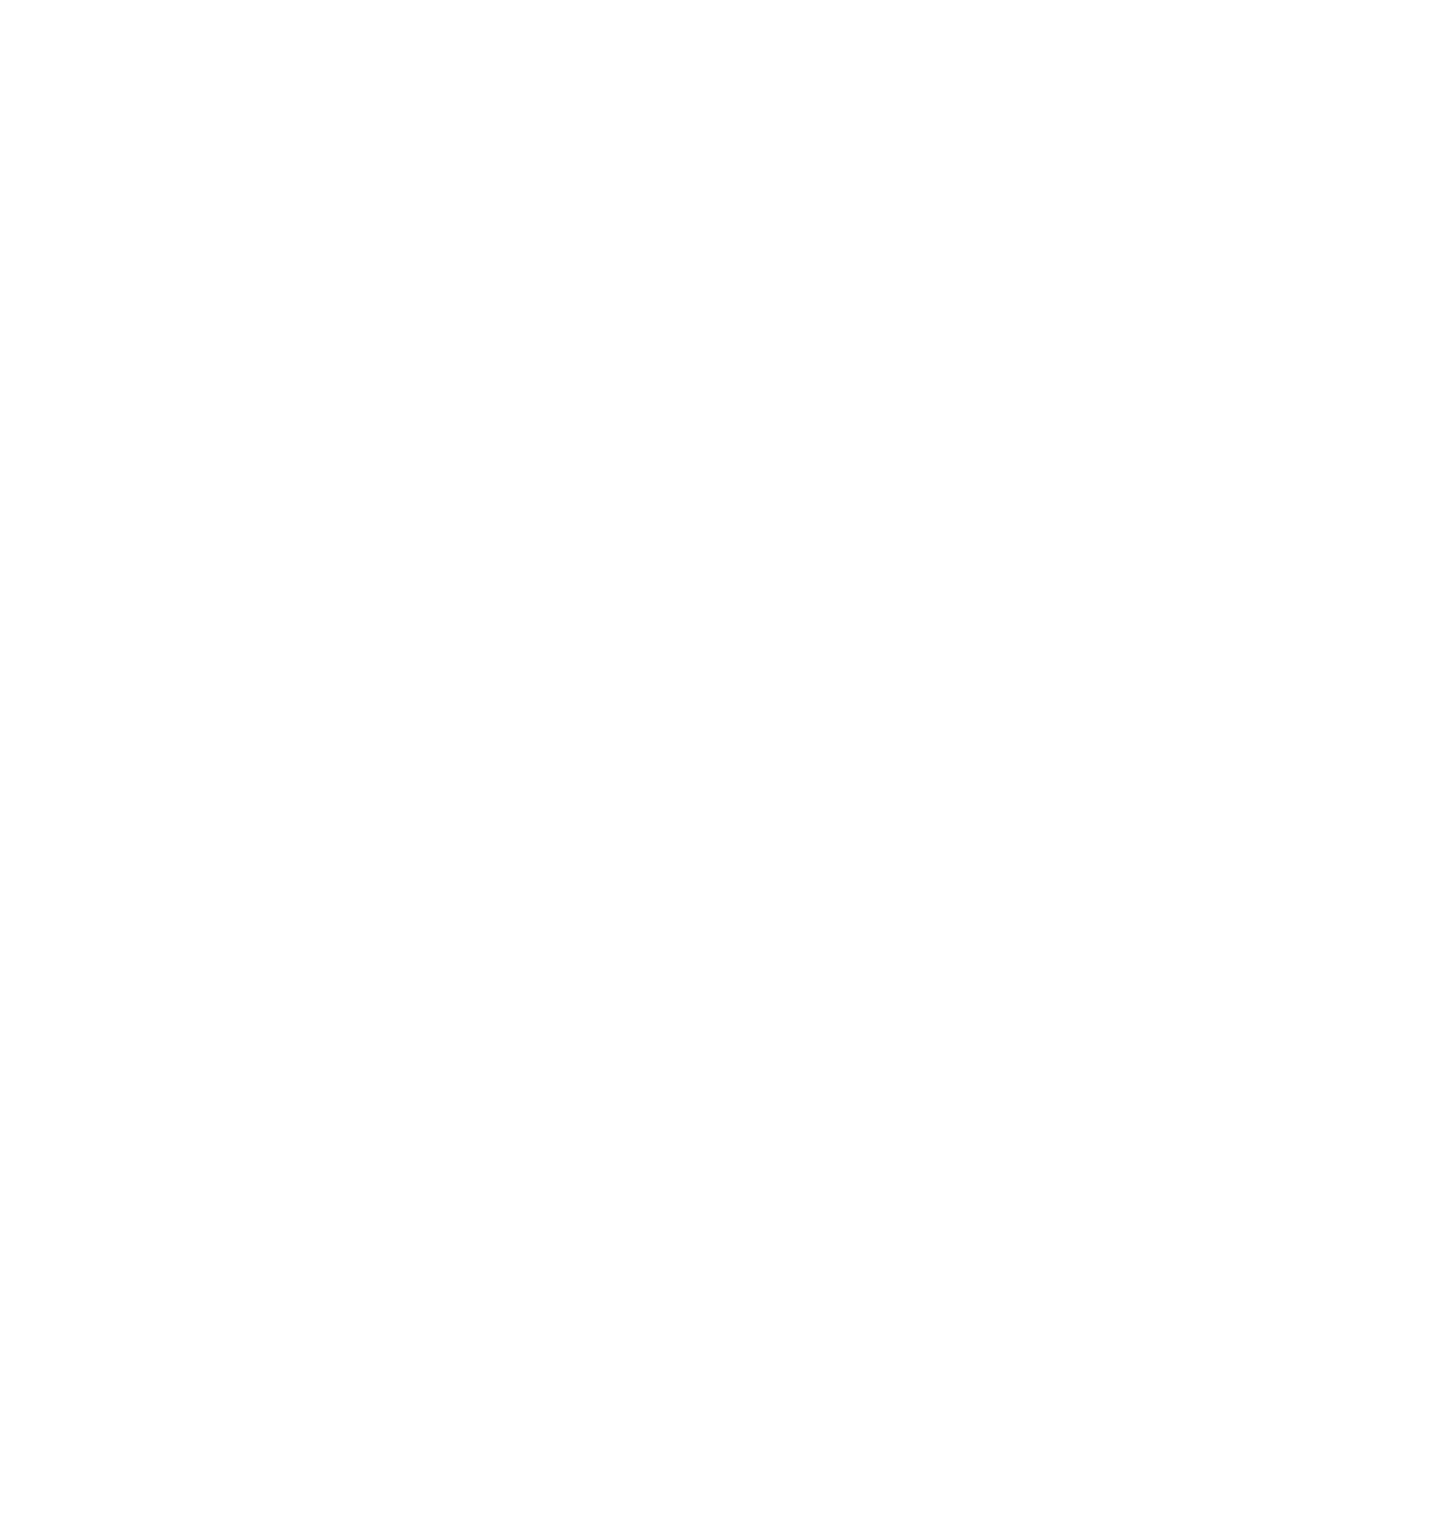 Euroseas logo for dark backgrounds (transparent PNG)